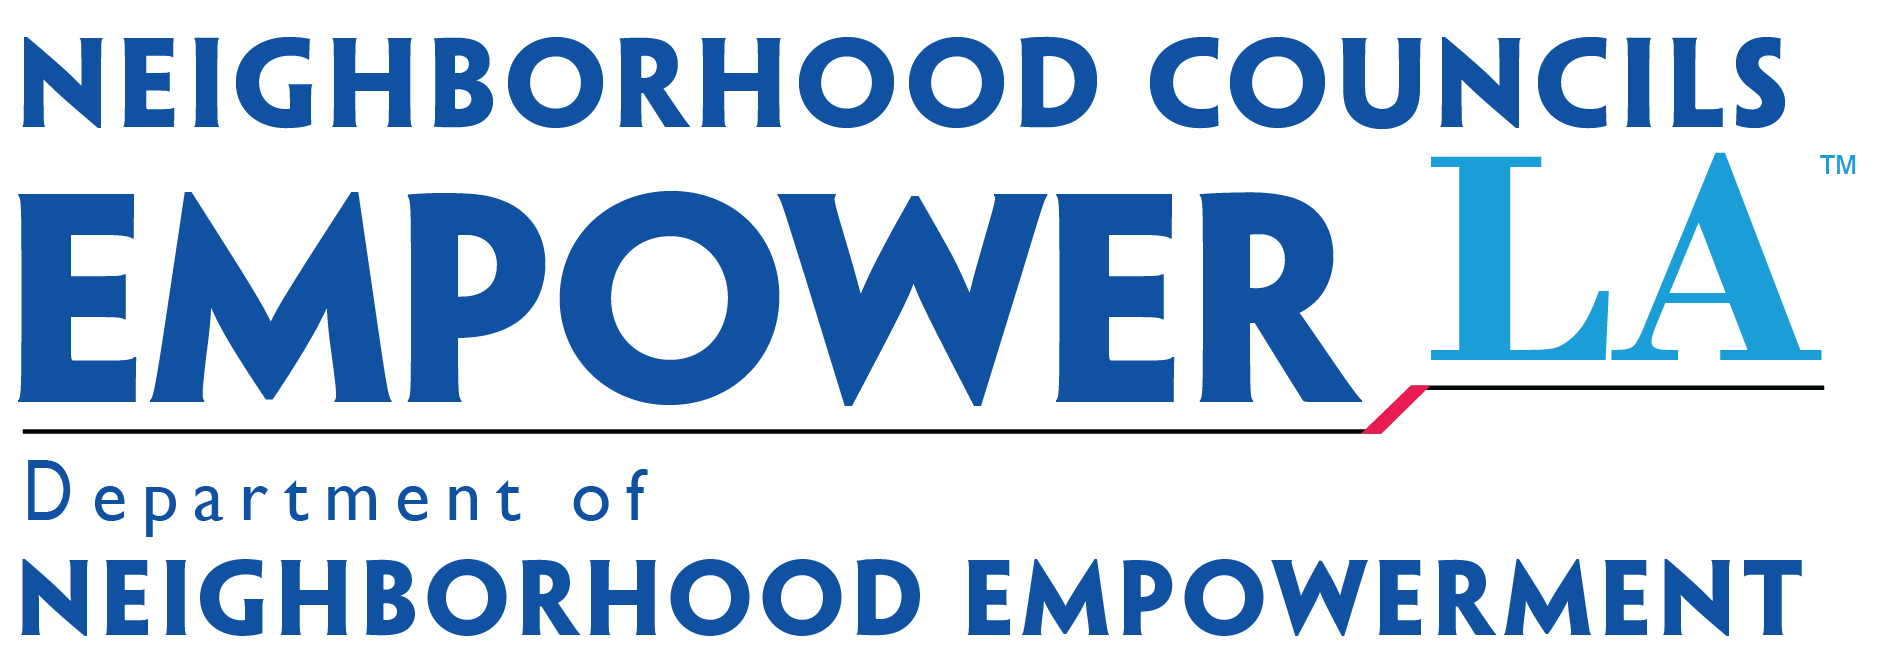 Empower LA